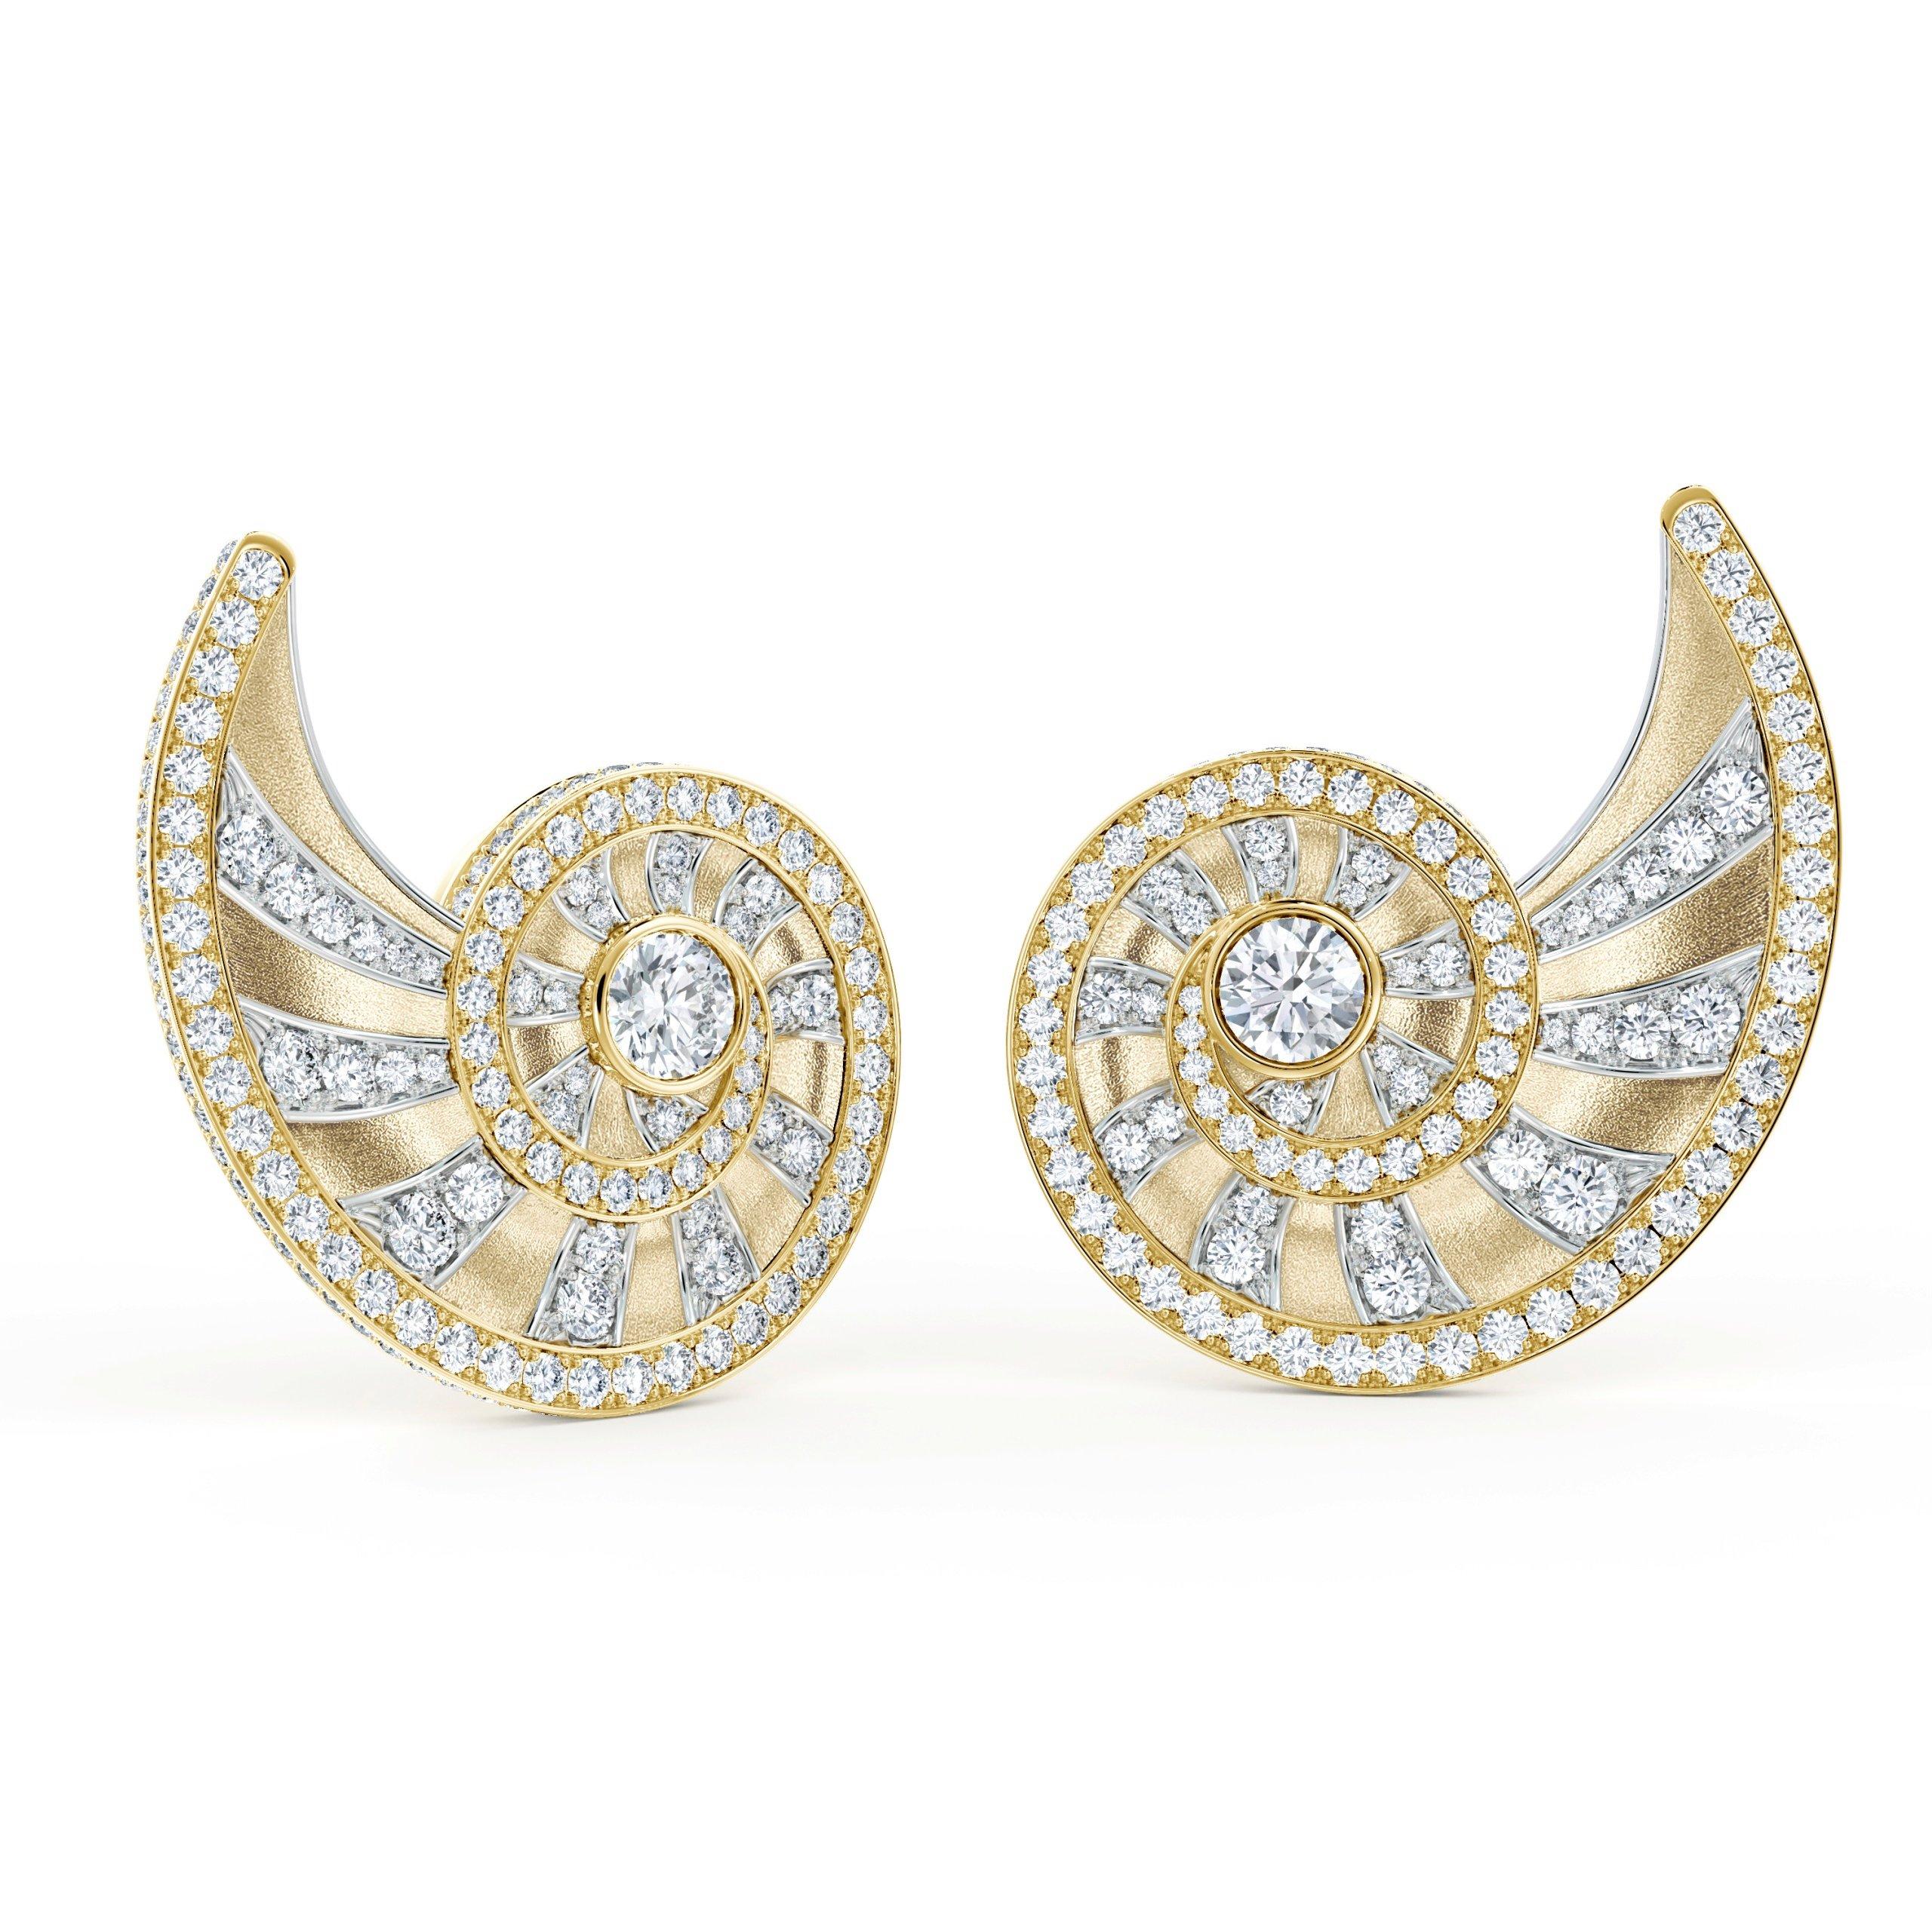 Clay flower bridal earrings - Creamy blossom and silk flower earrings -  Style #951